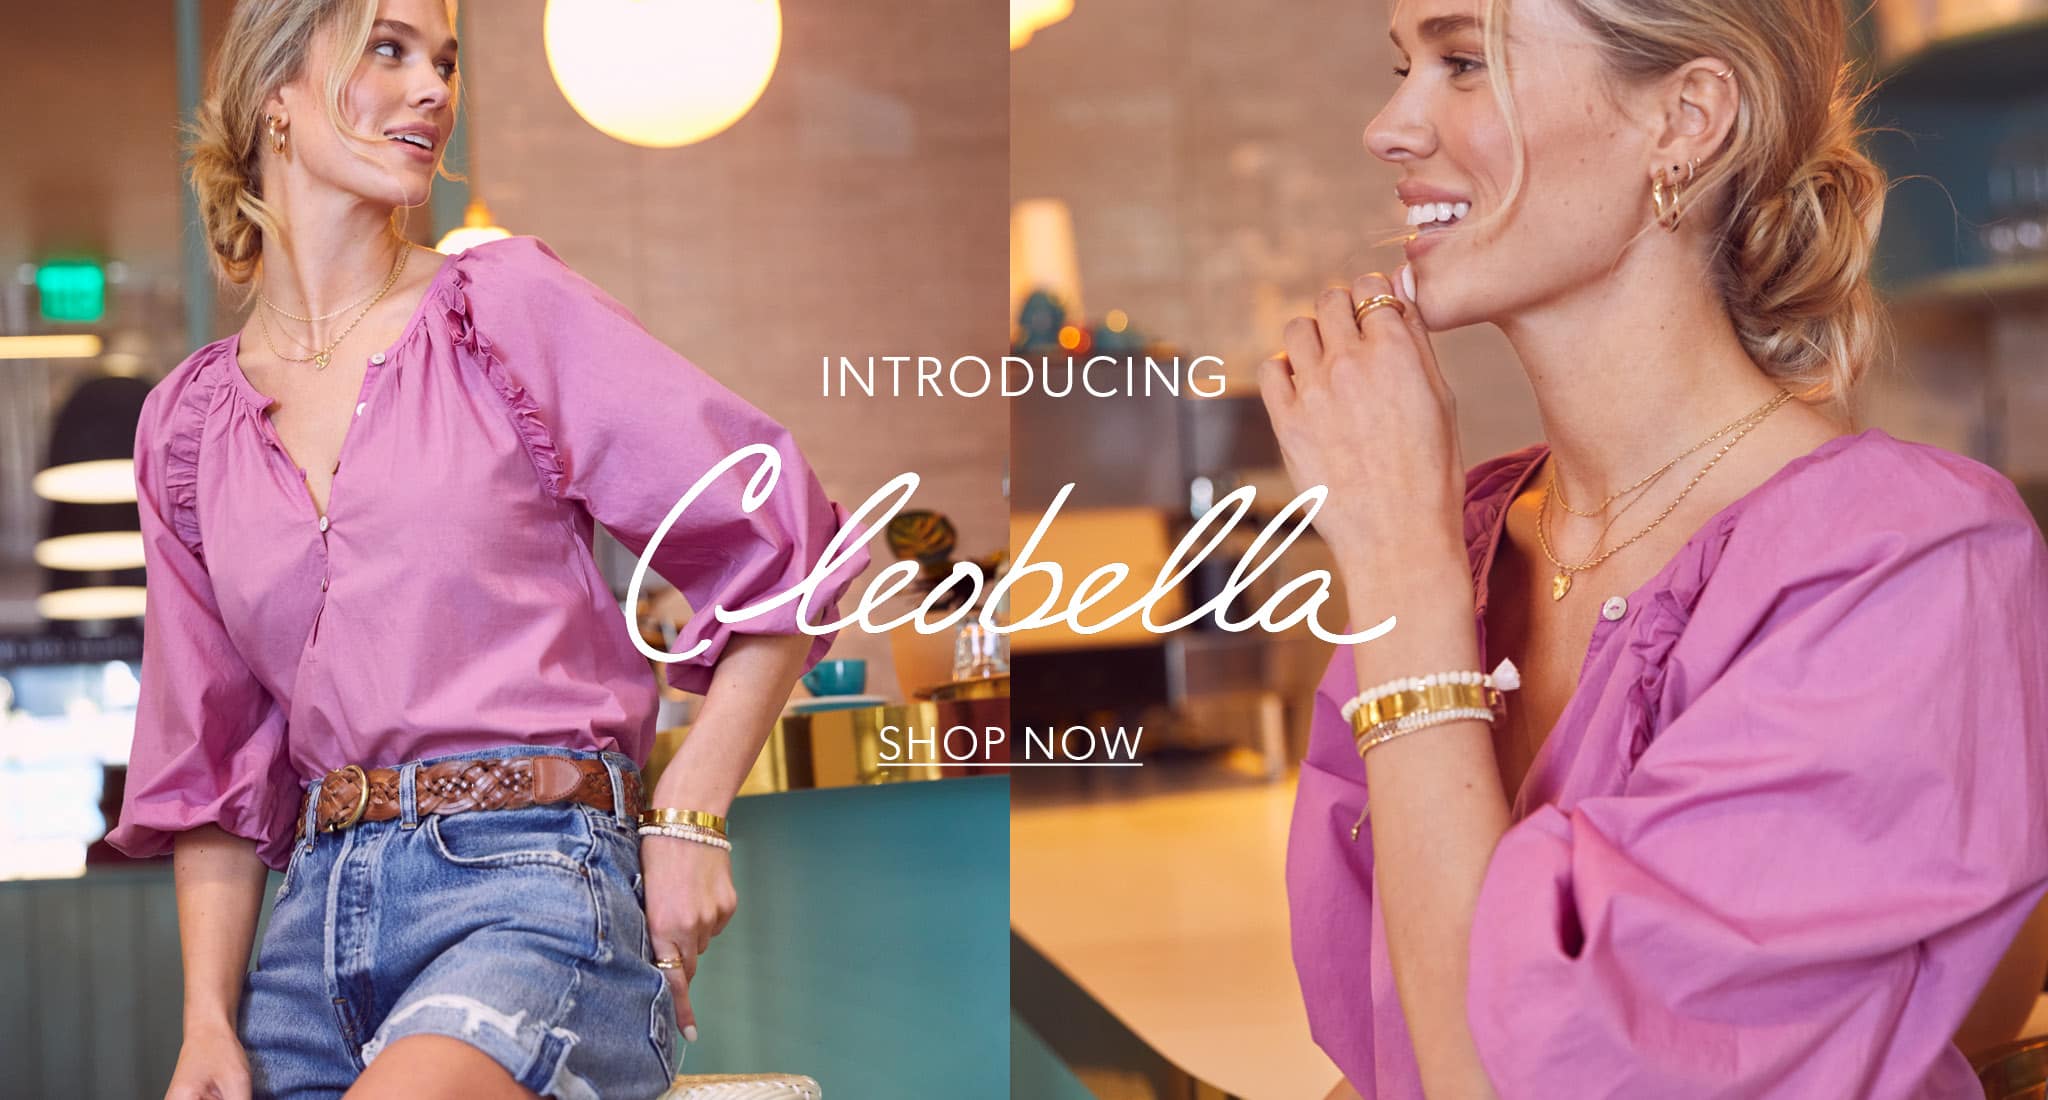 Introducing Cleobella - Shop Now